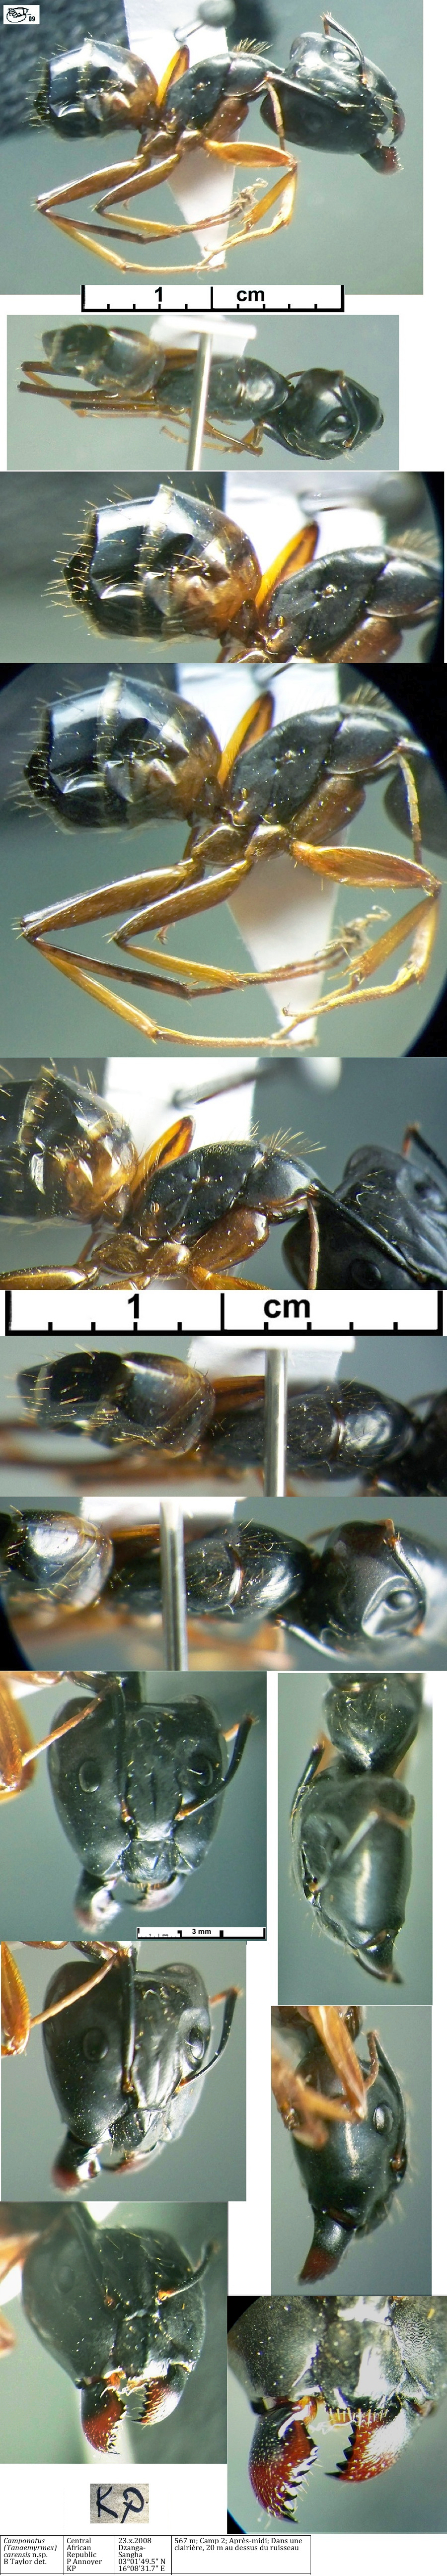 {Camponotus (Tananemyrmex) carensis major